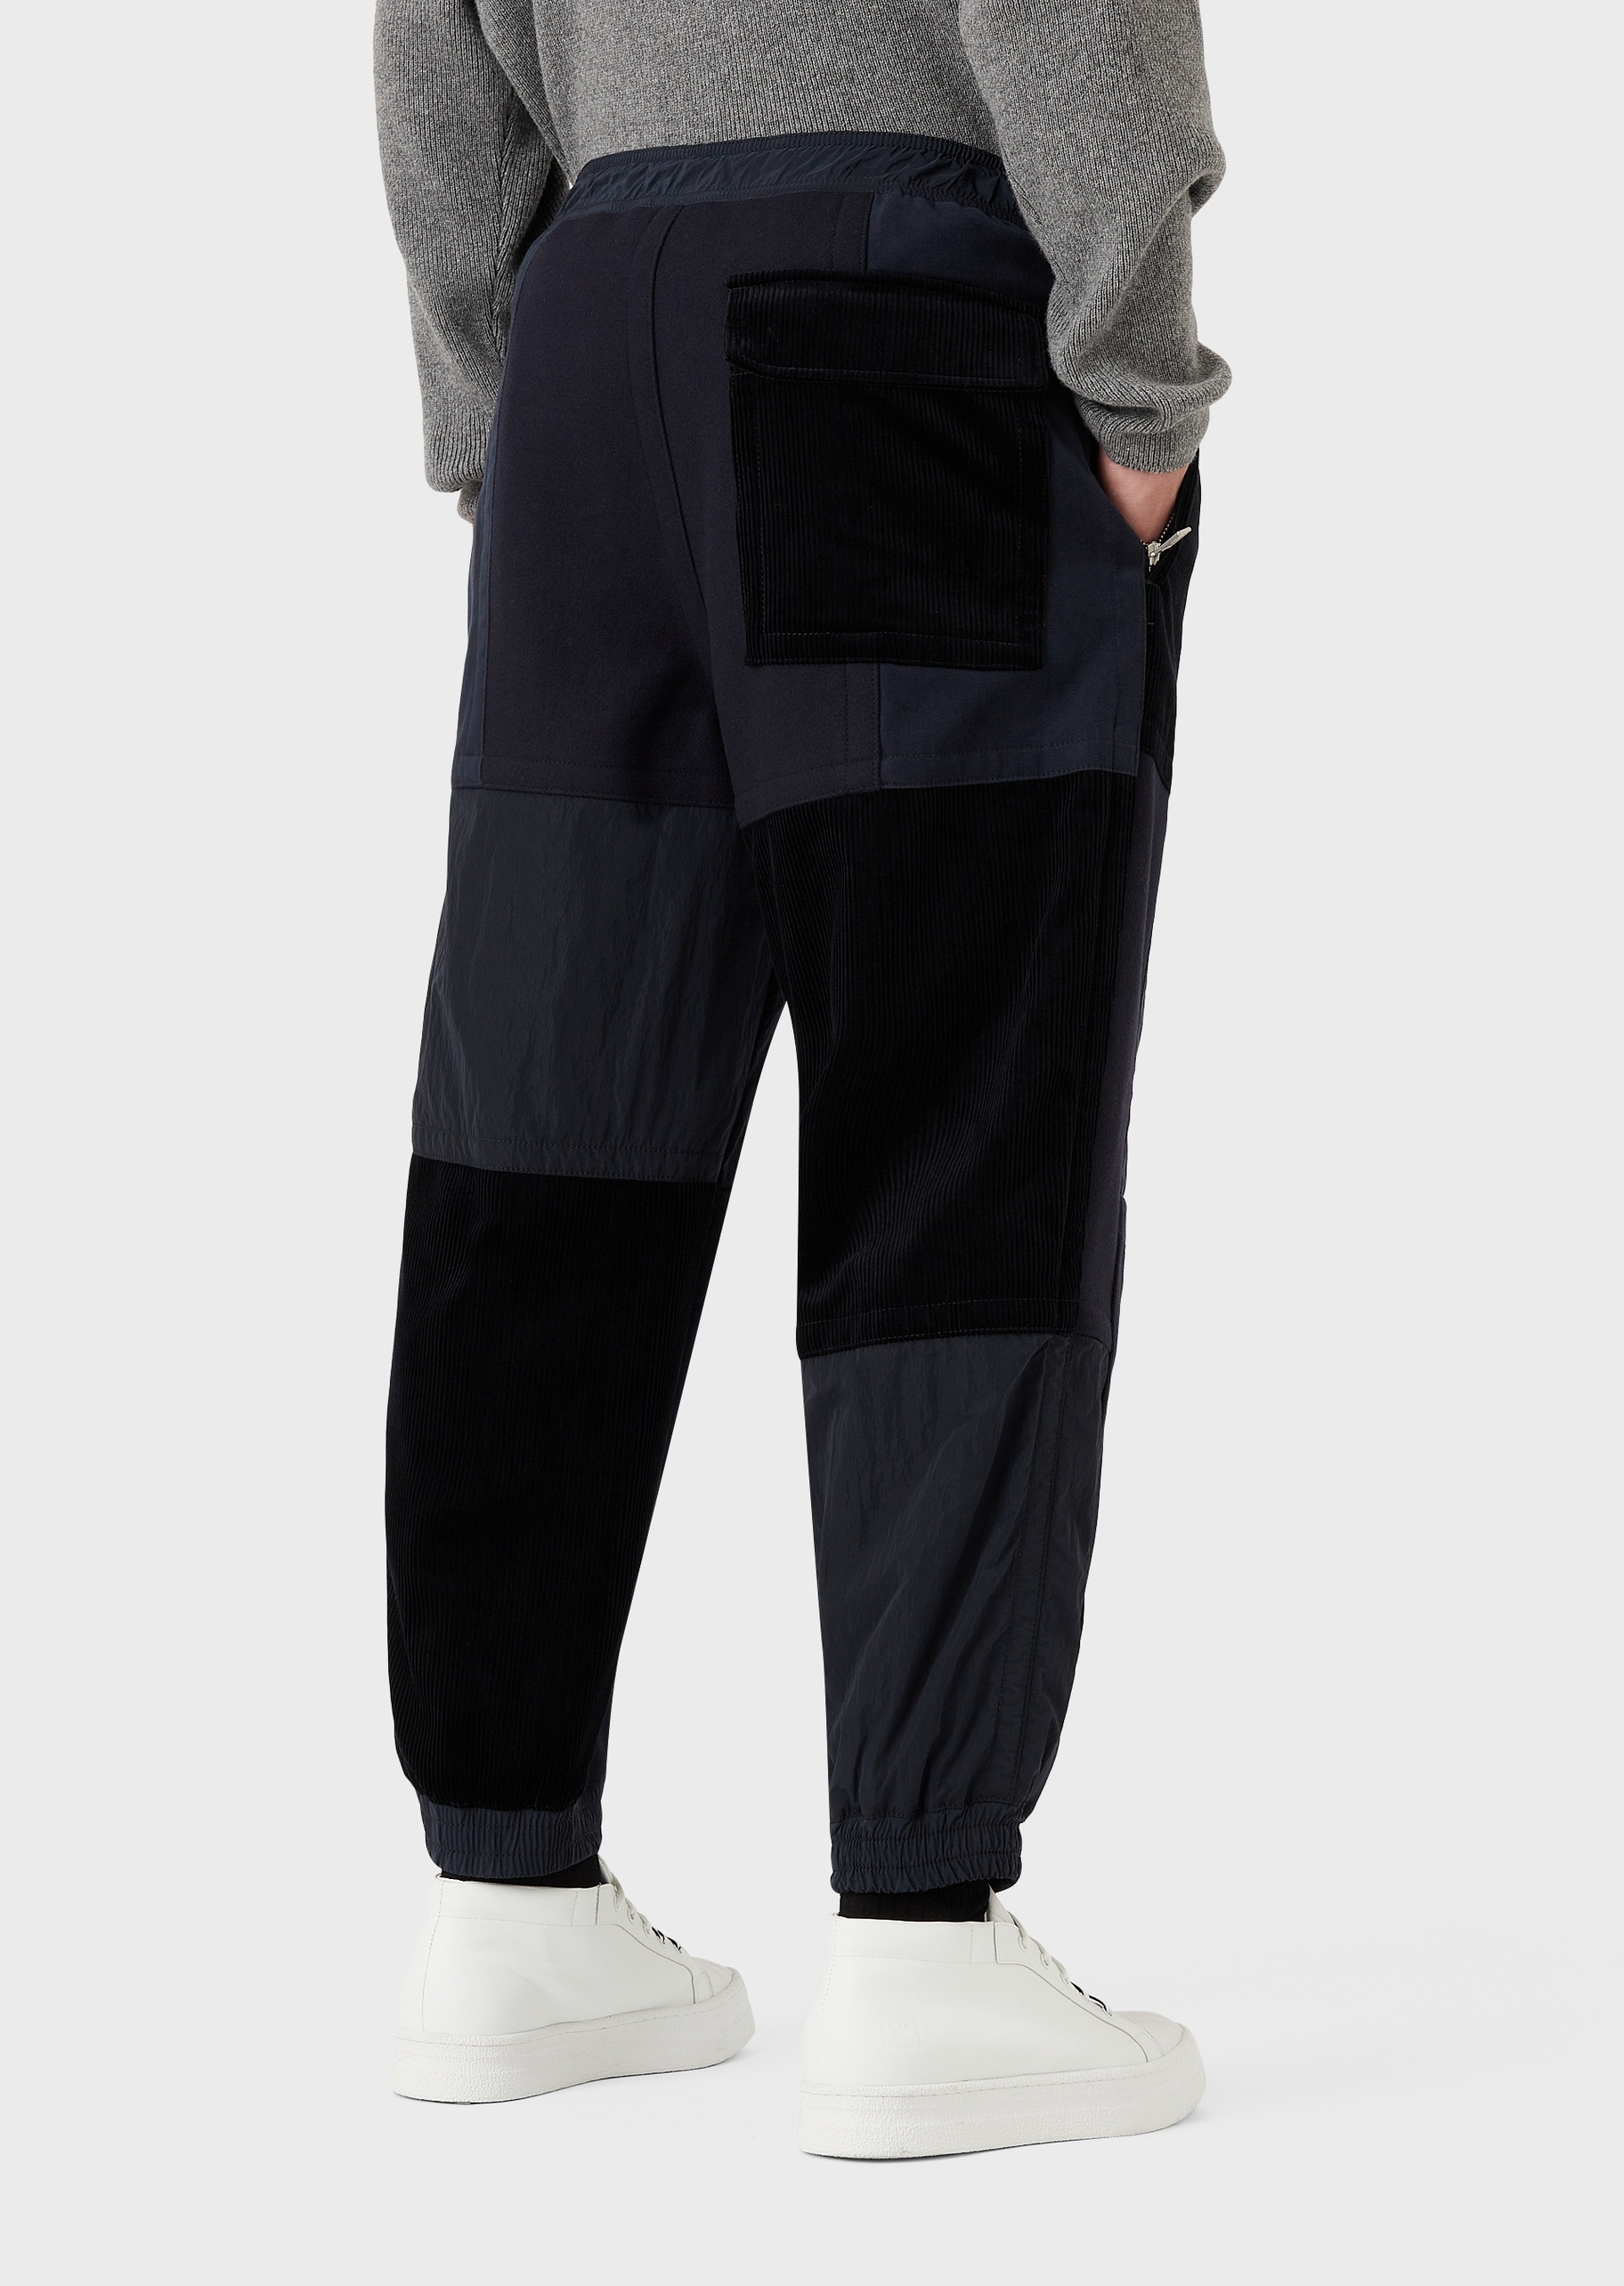 Emporio Armani 可持续系列系带卫裤